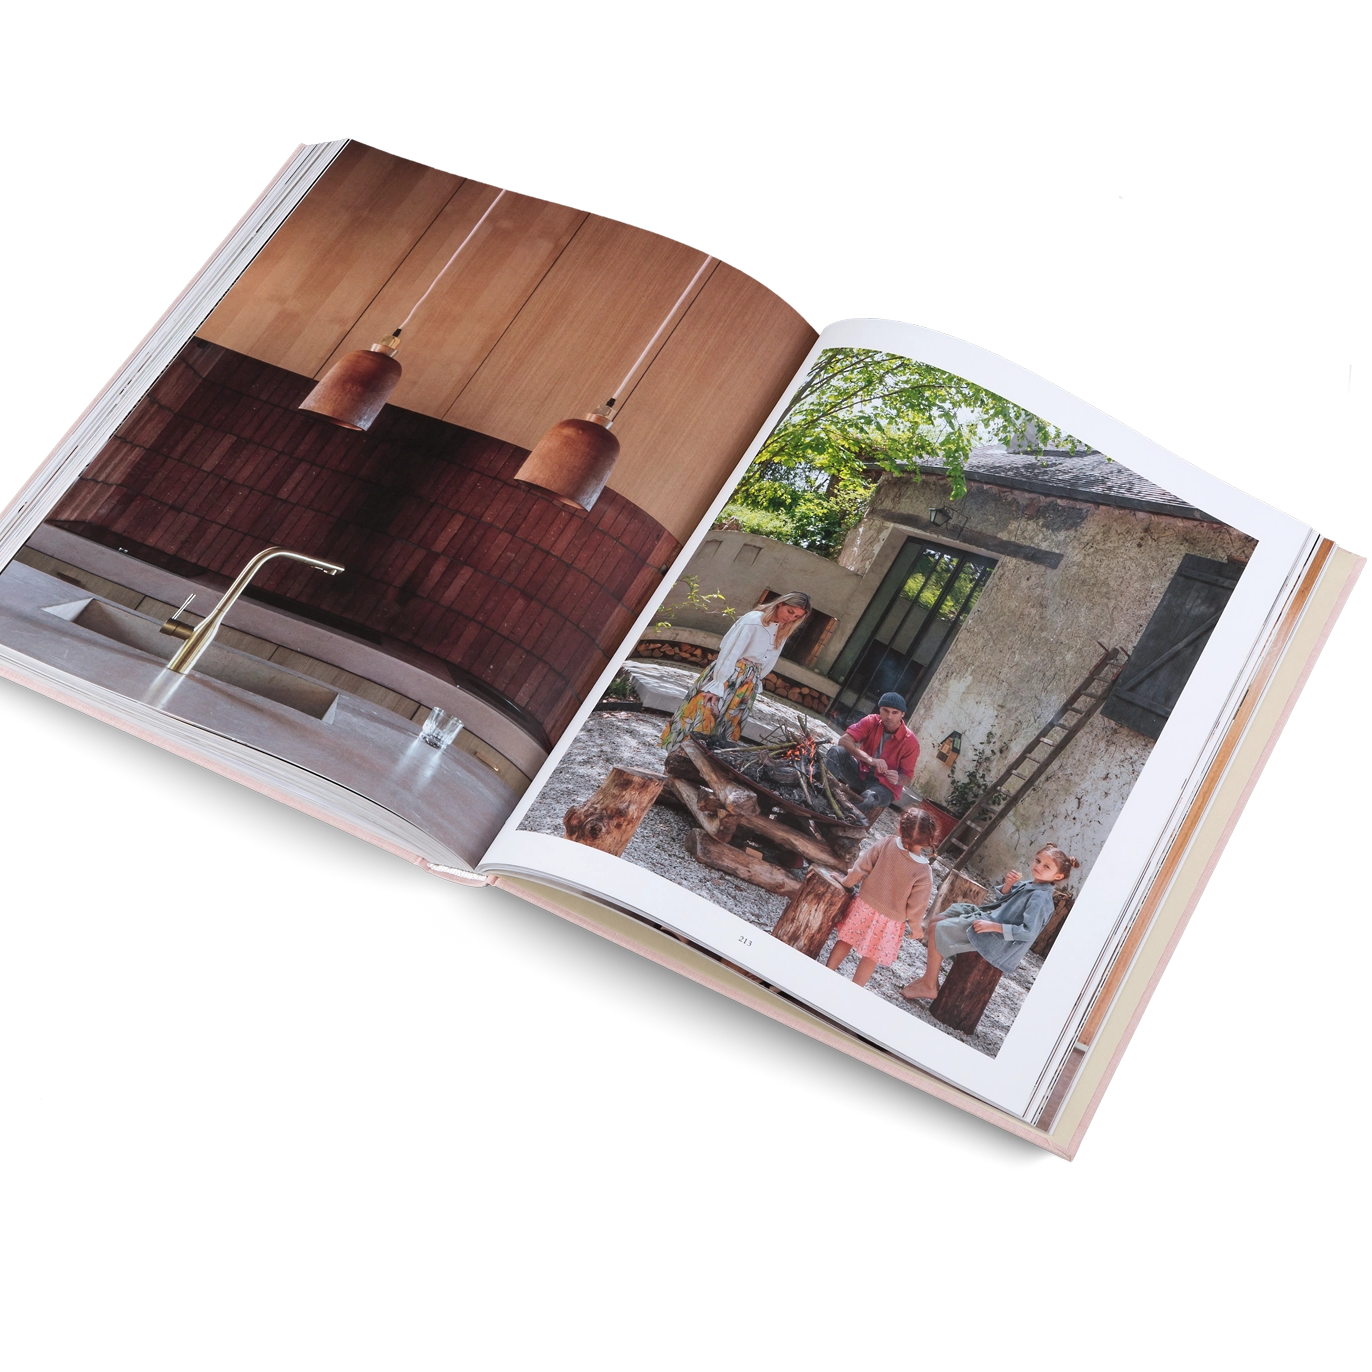 Inspiring Family Homes - Family-friendly Interiors & Design, libro